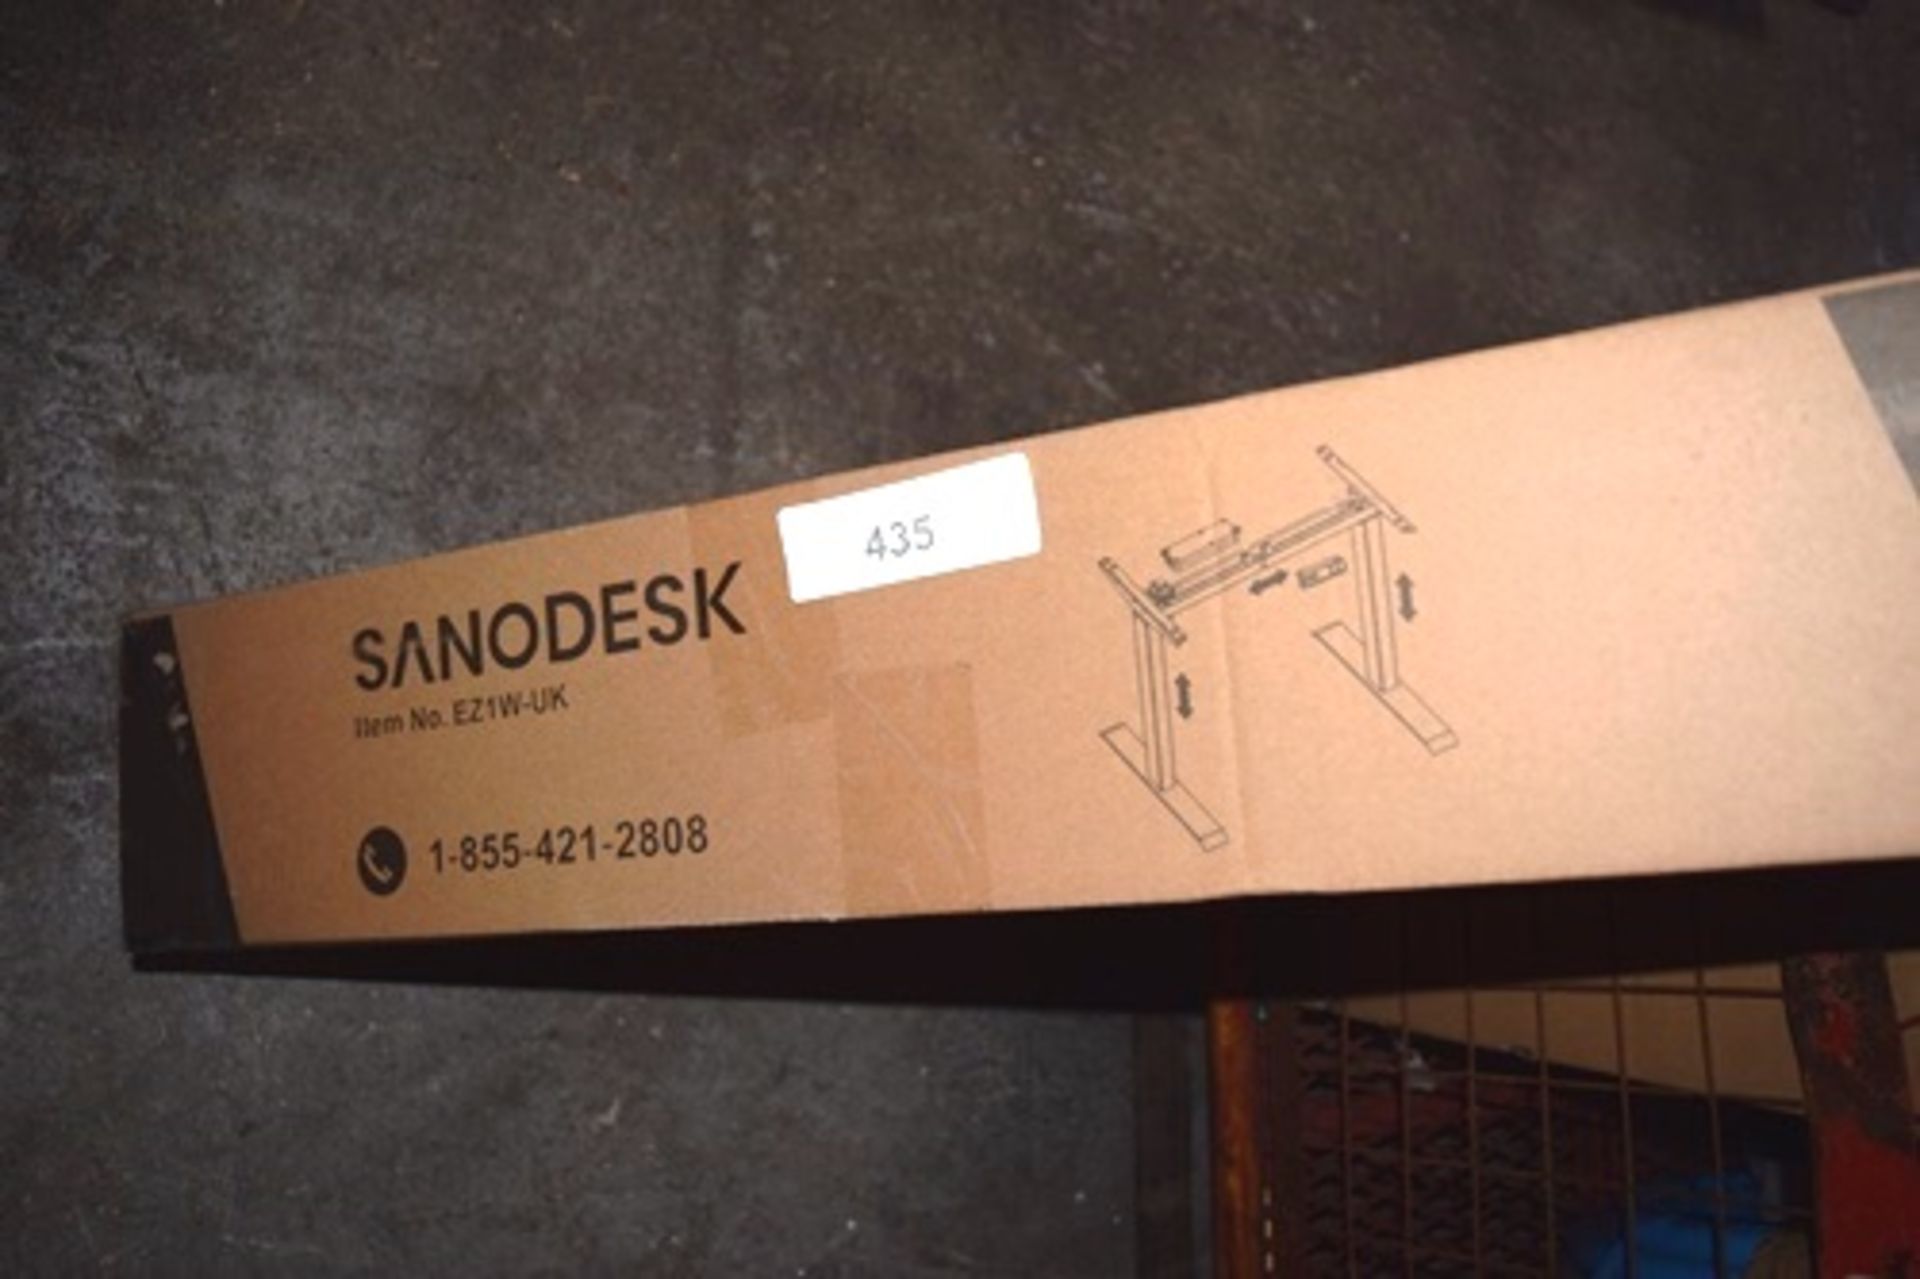 1 x Sanodesk height adjustable electric standing desk frame only, model EZIW-UK, RRP £310.00 -